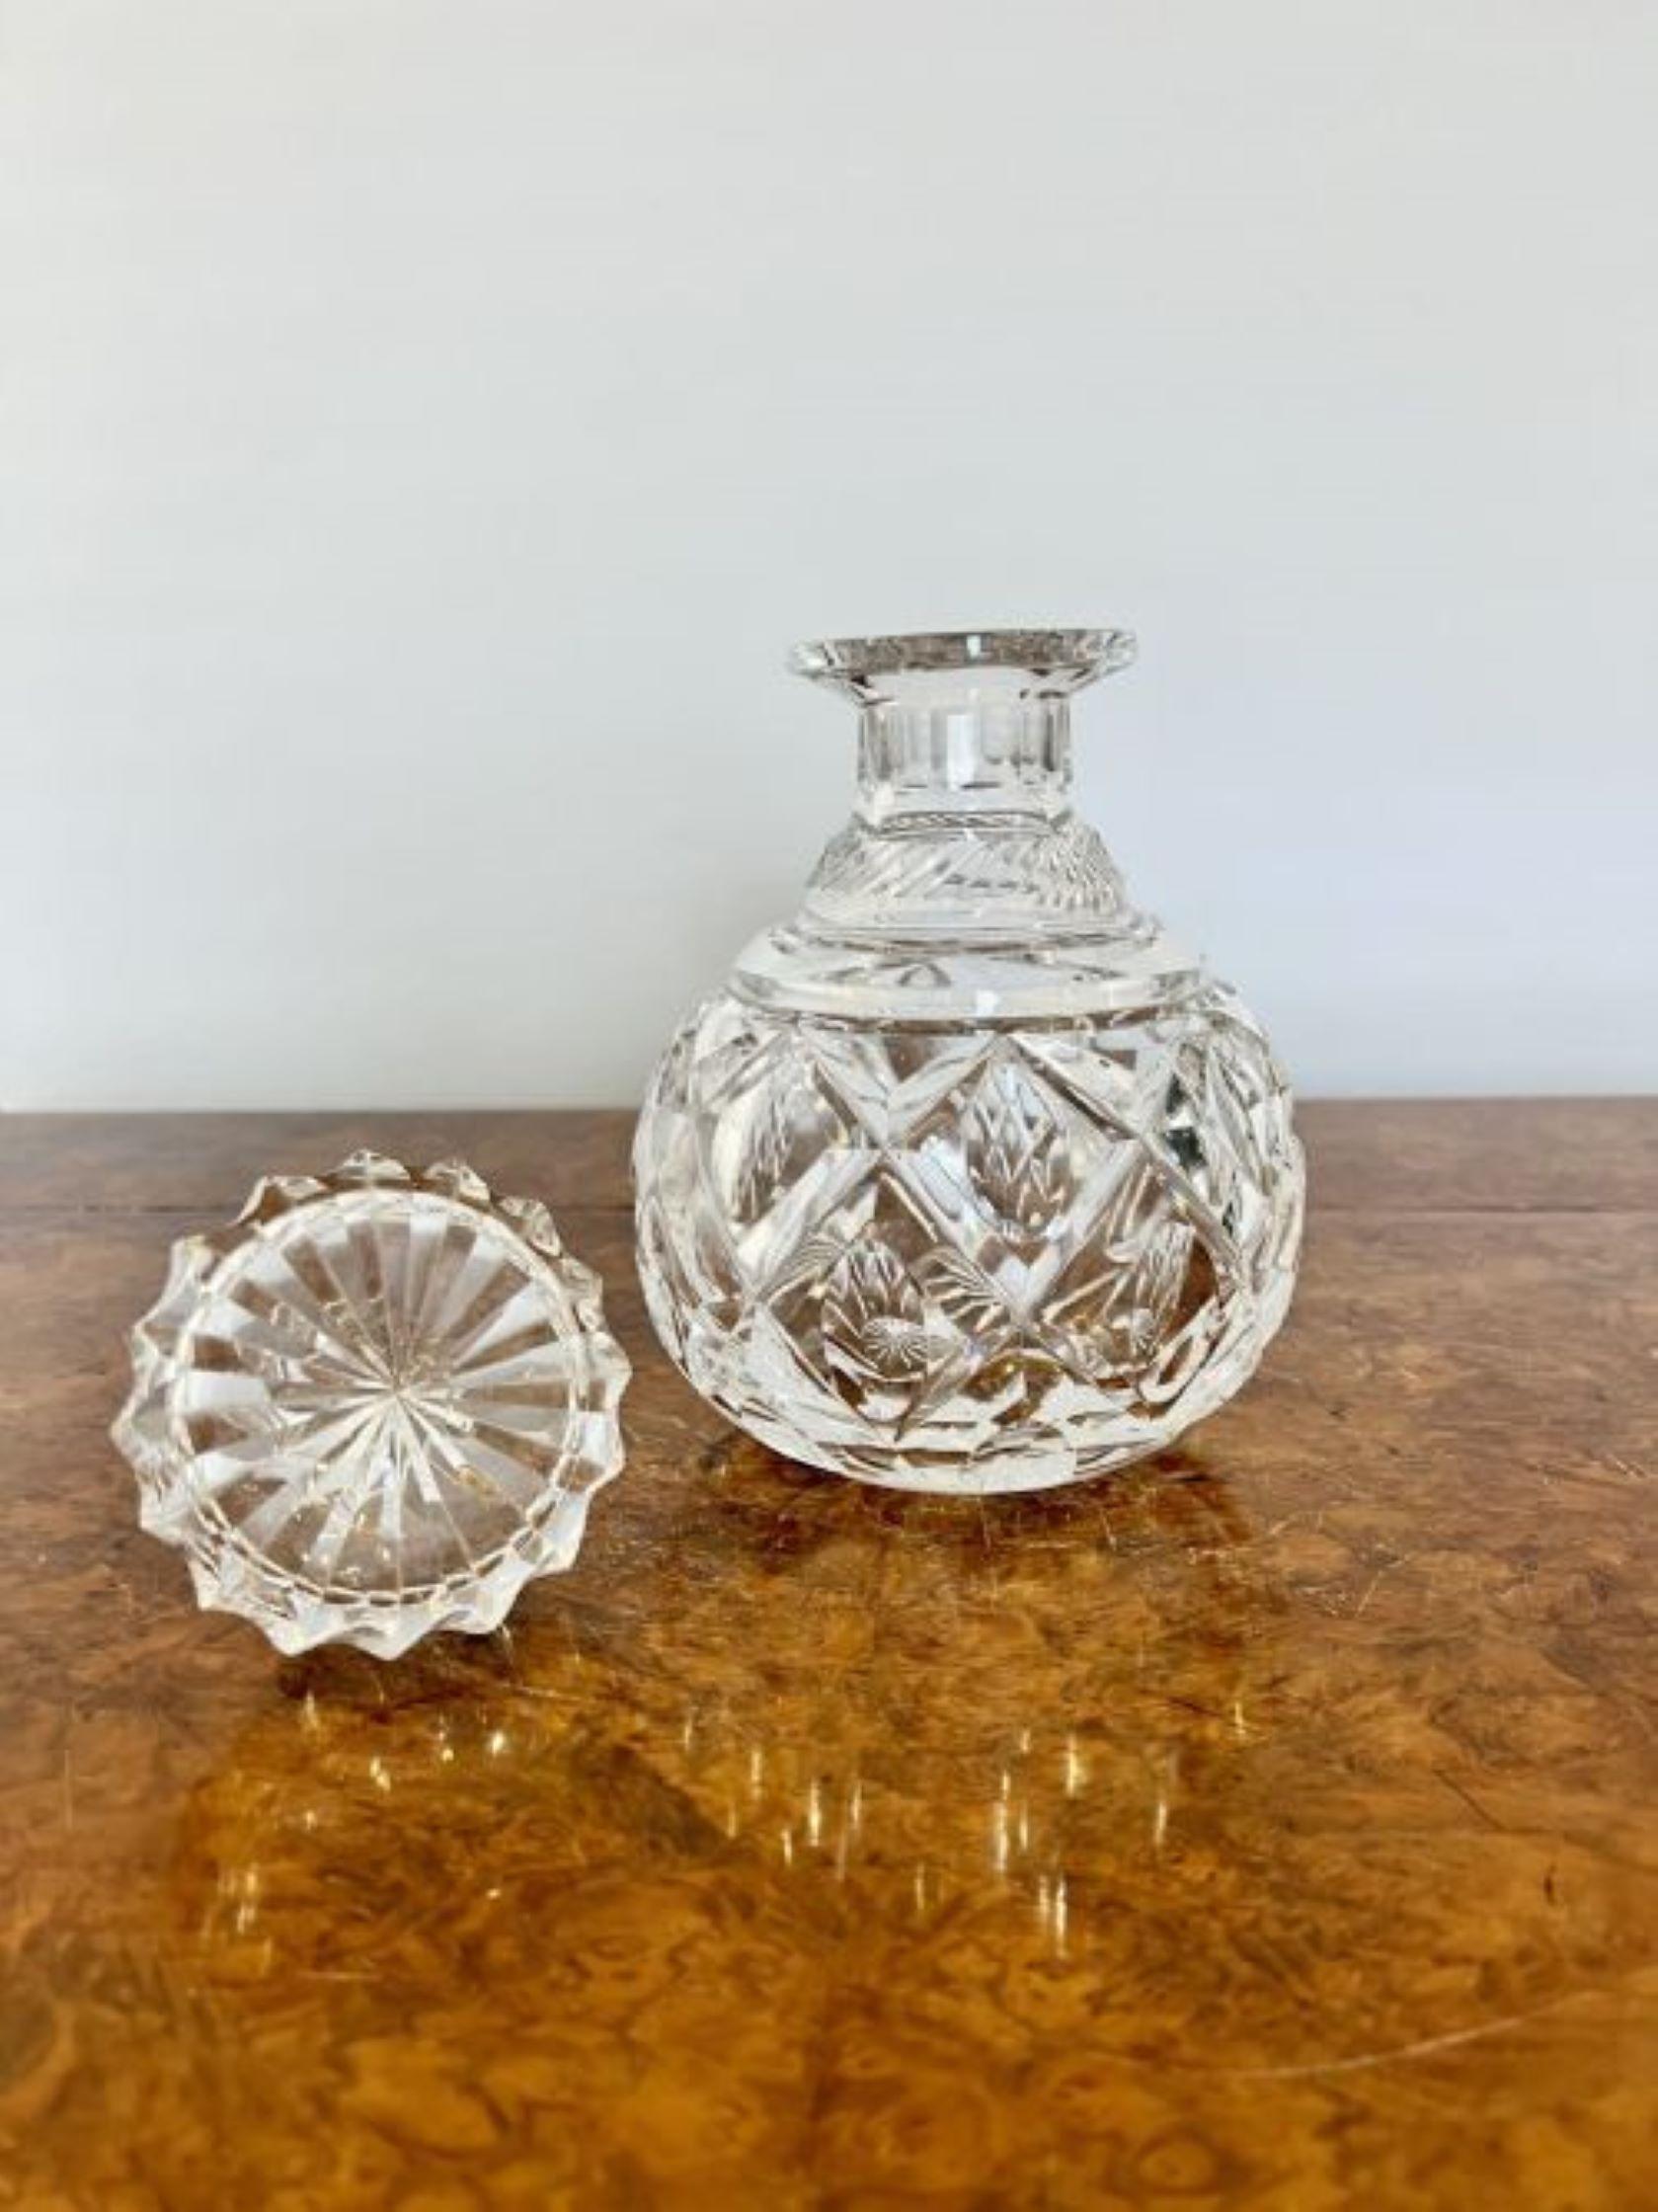 Antique Edwardian quality cut glass decanter having a quality cut glass decanter with the original cut glass shaped stopper 